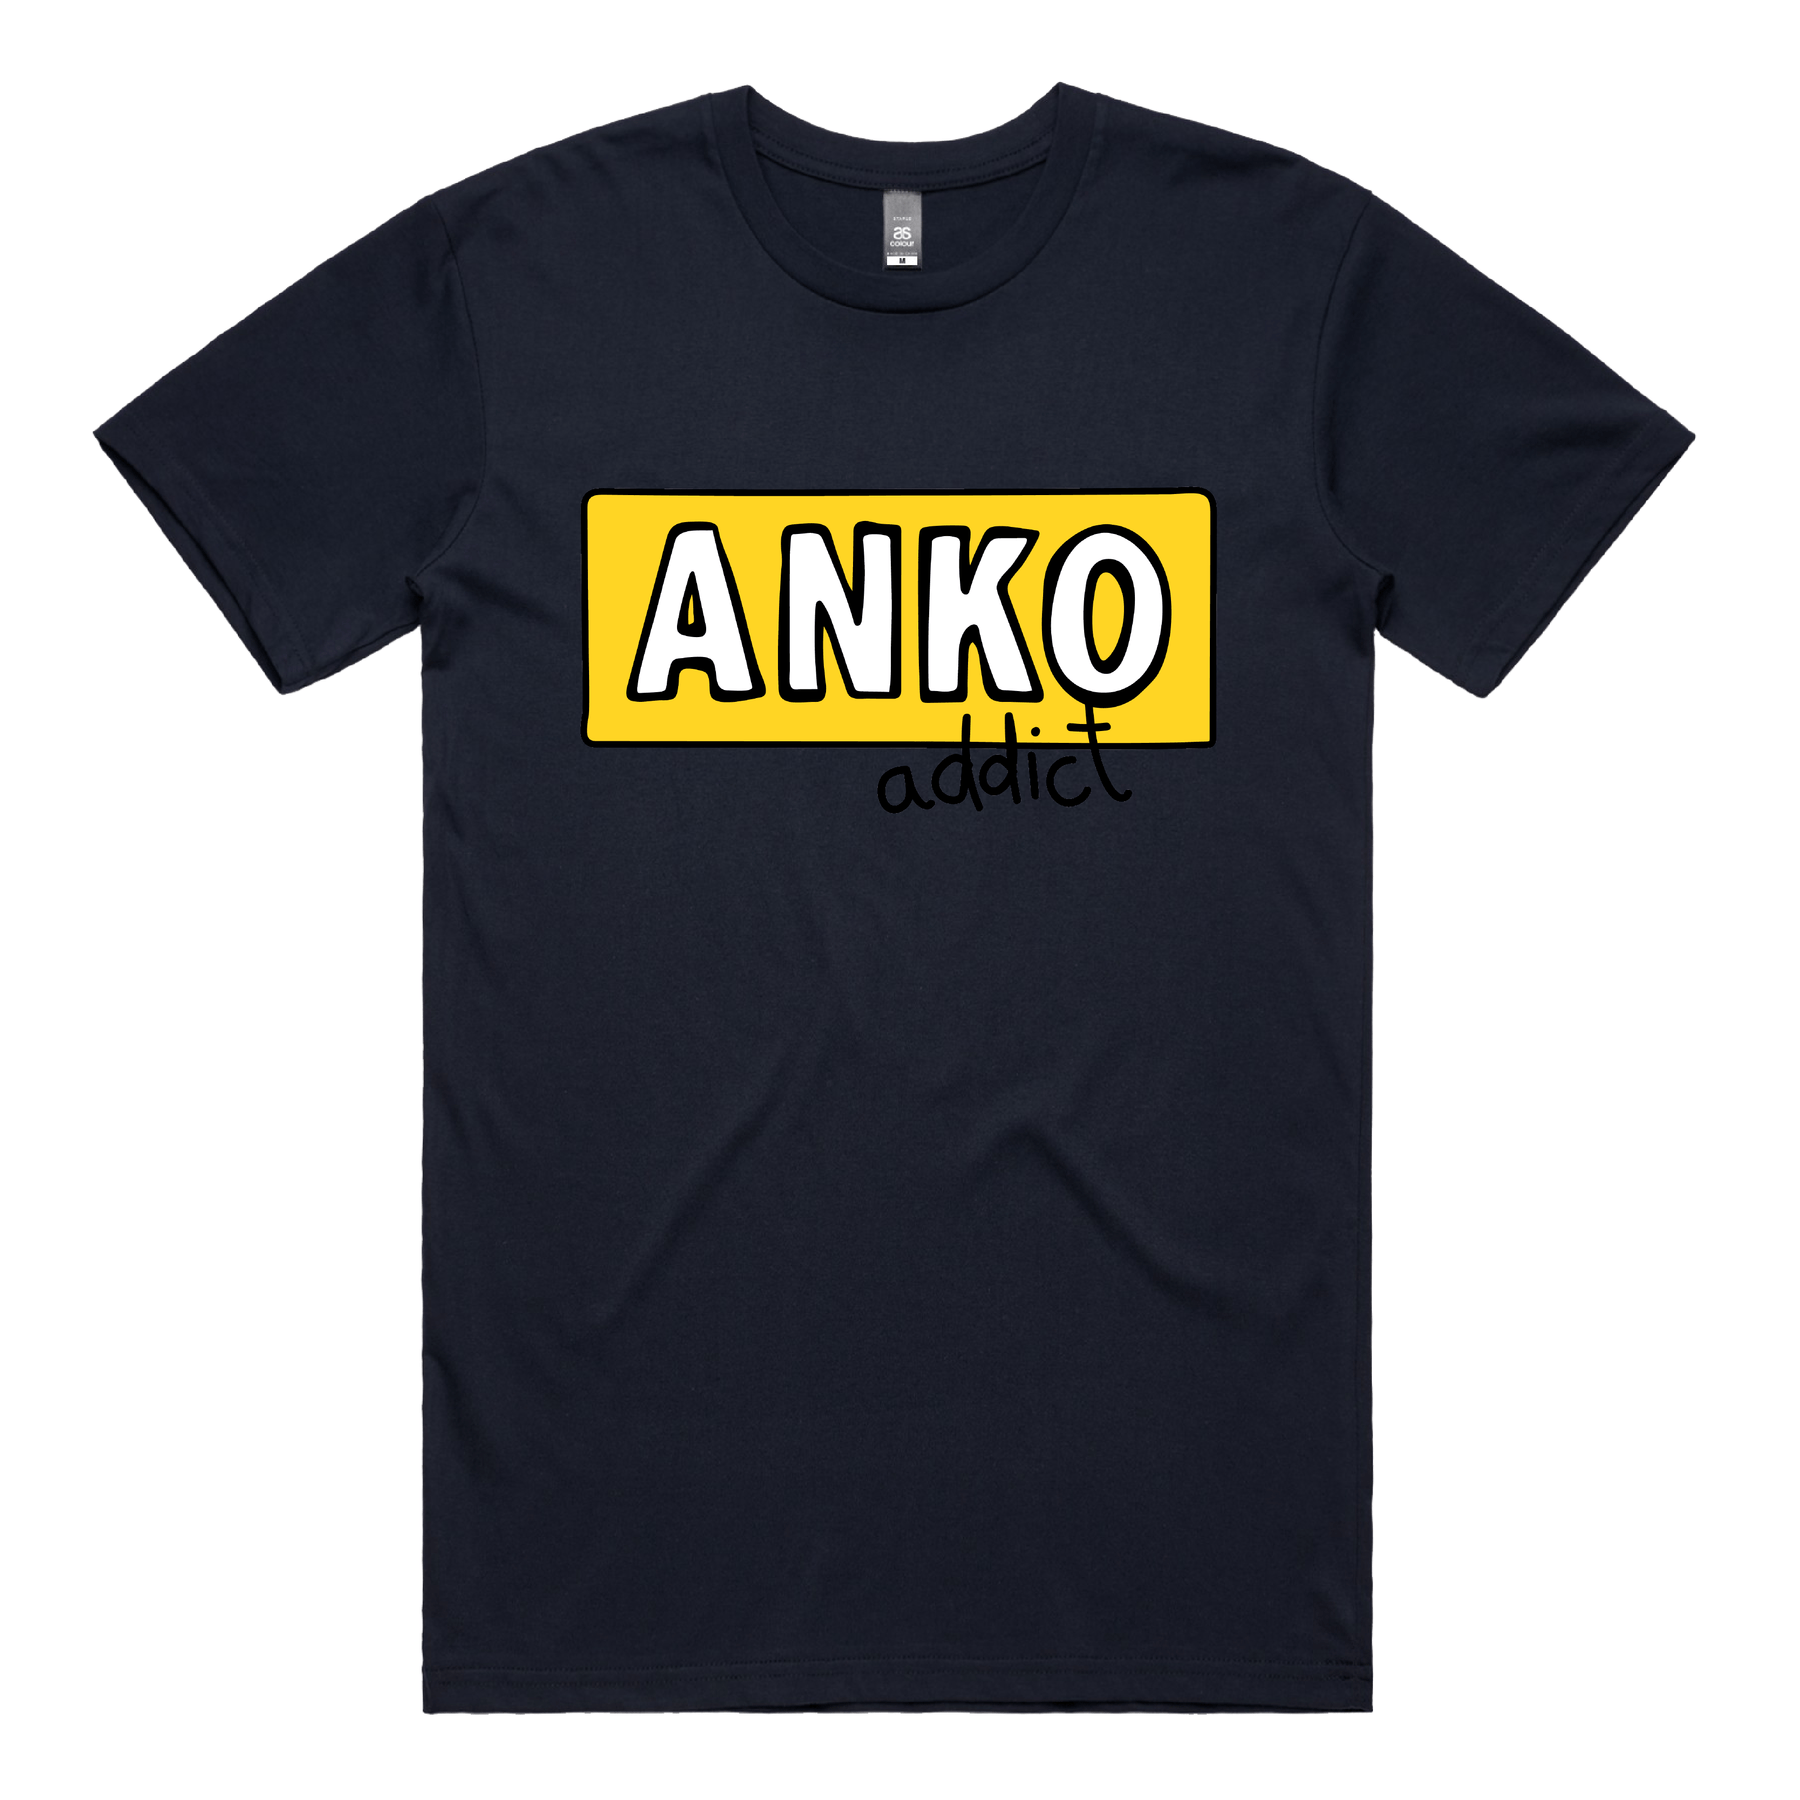 S / Navy / Large Front Design ANKO Addict 💉 - Men's T Shirt